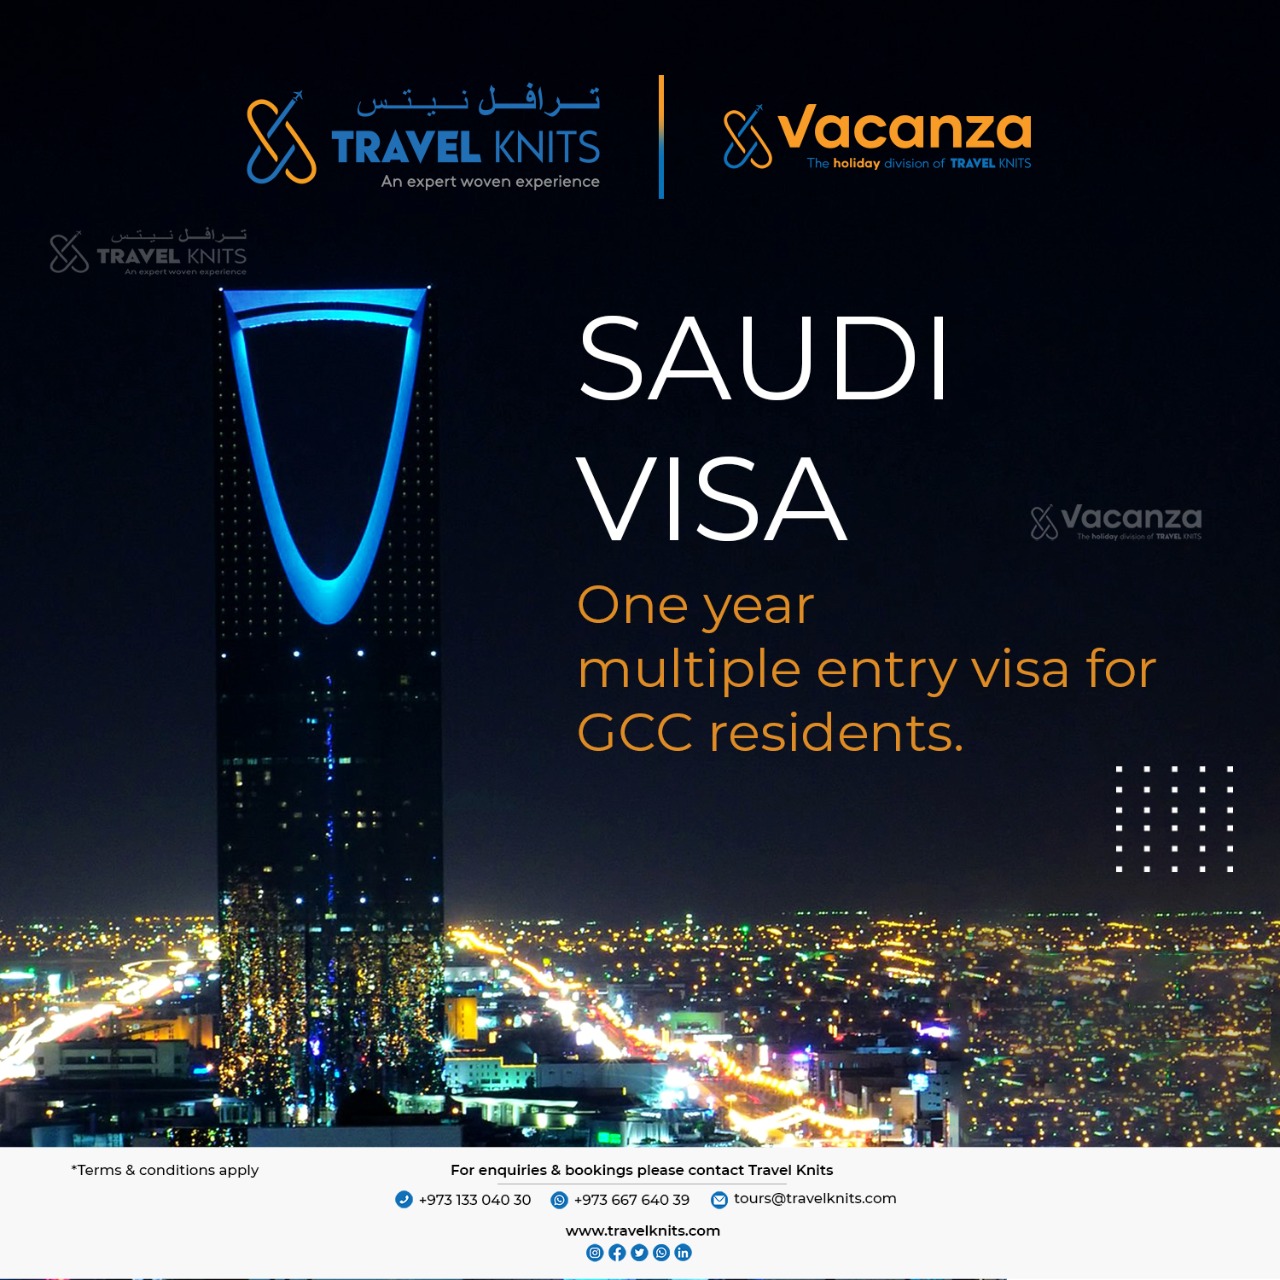 Saudi visaTour Packages - Book honeymoon ,family,adventure tour packages to Saudi visa|Travel Knits